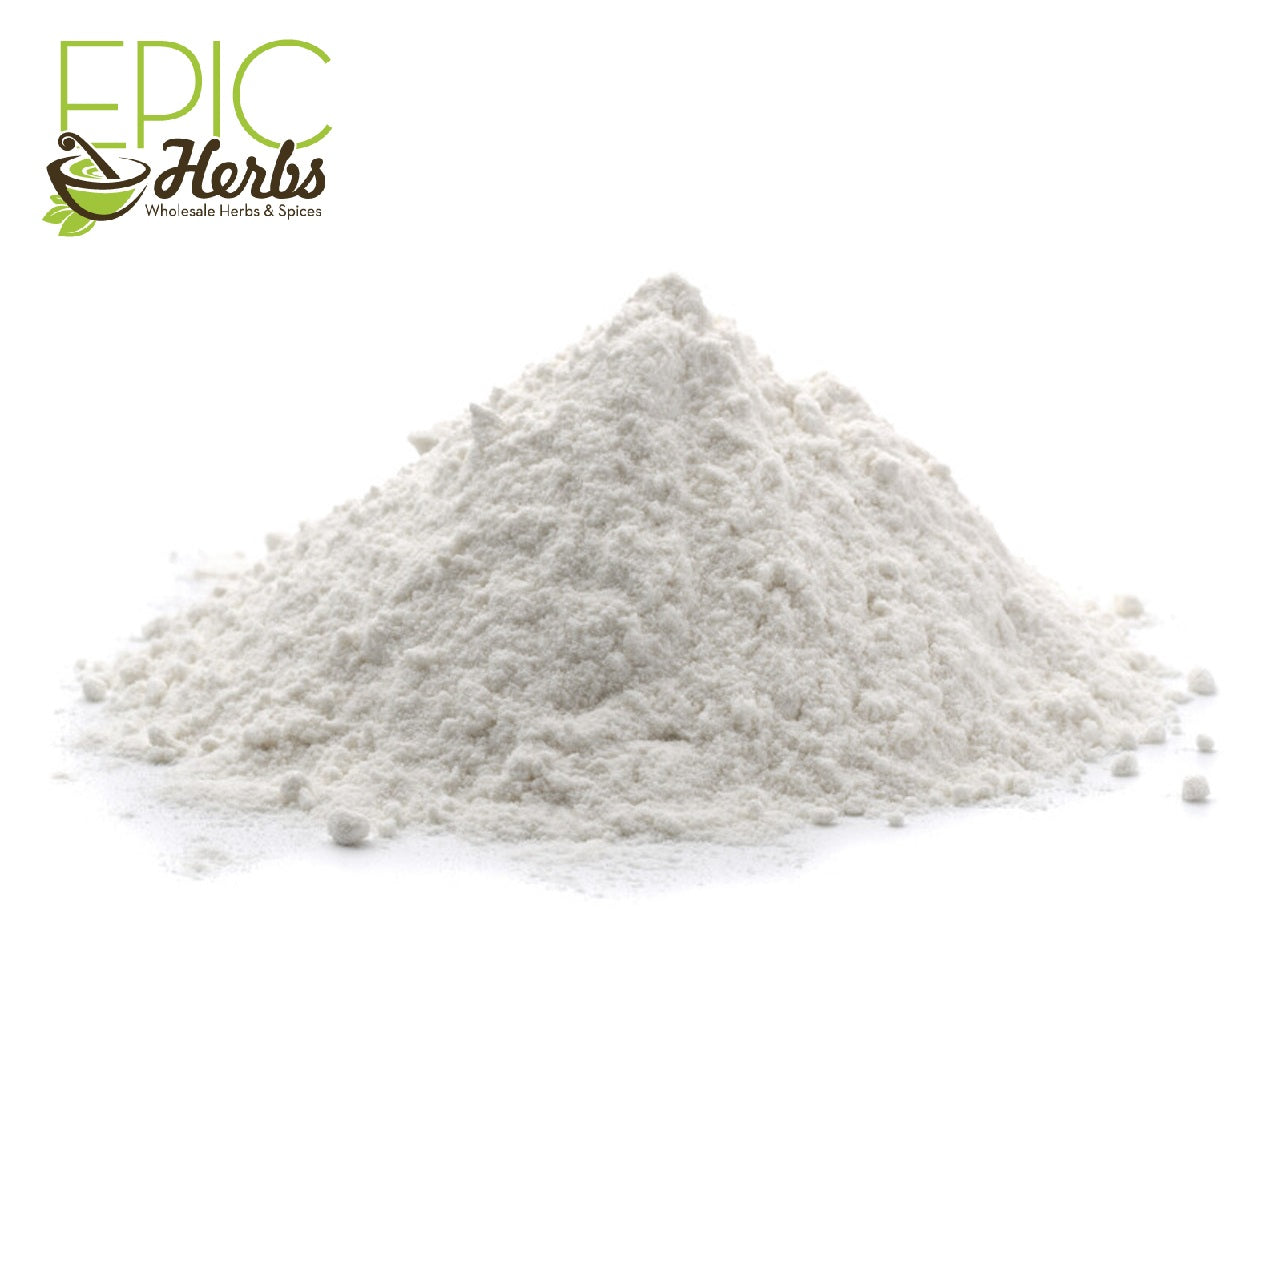 Kaolin Clay Powder - 1 lb